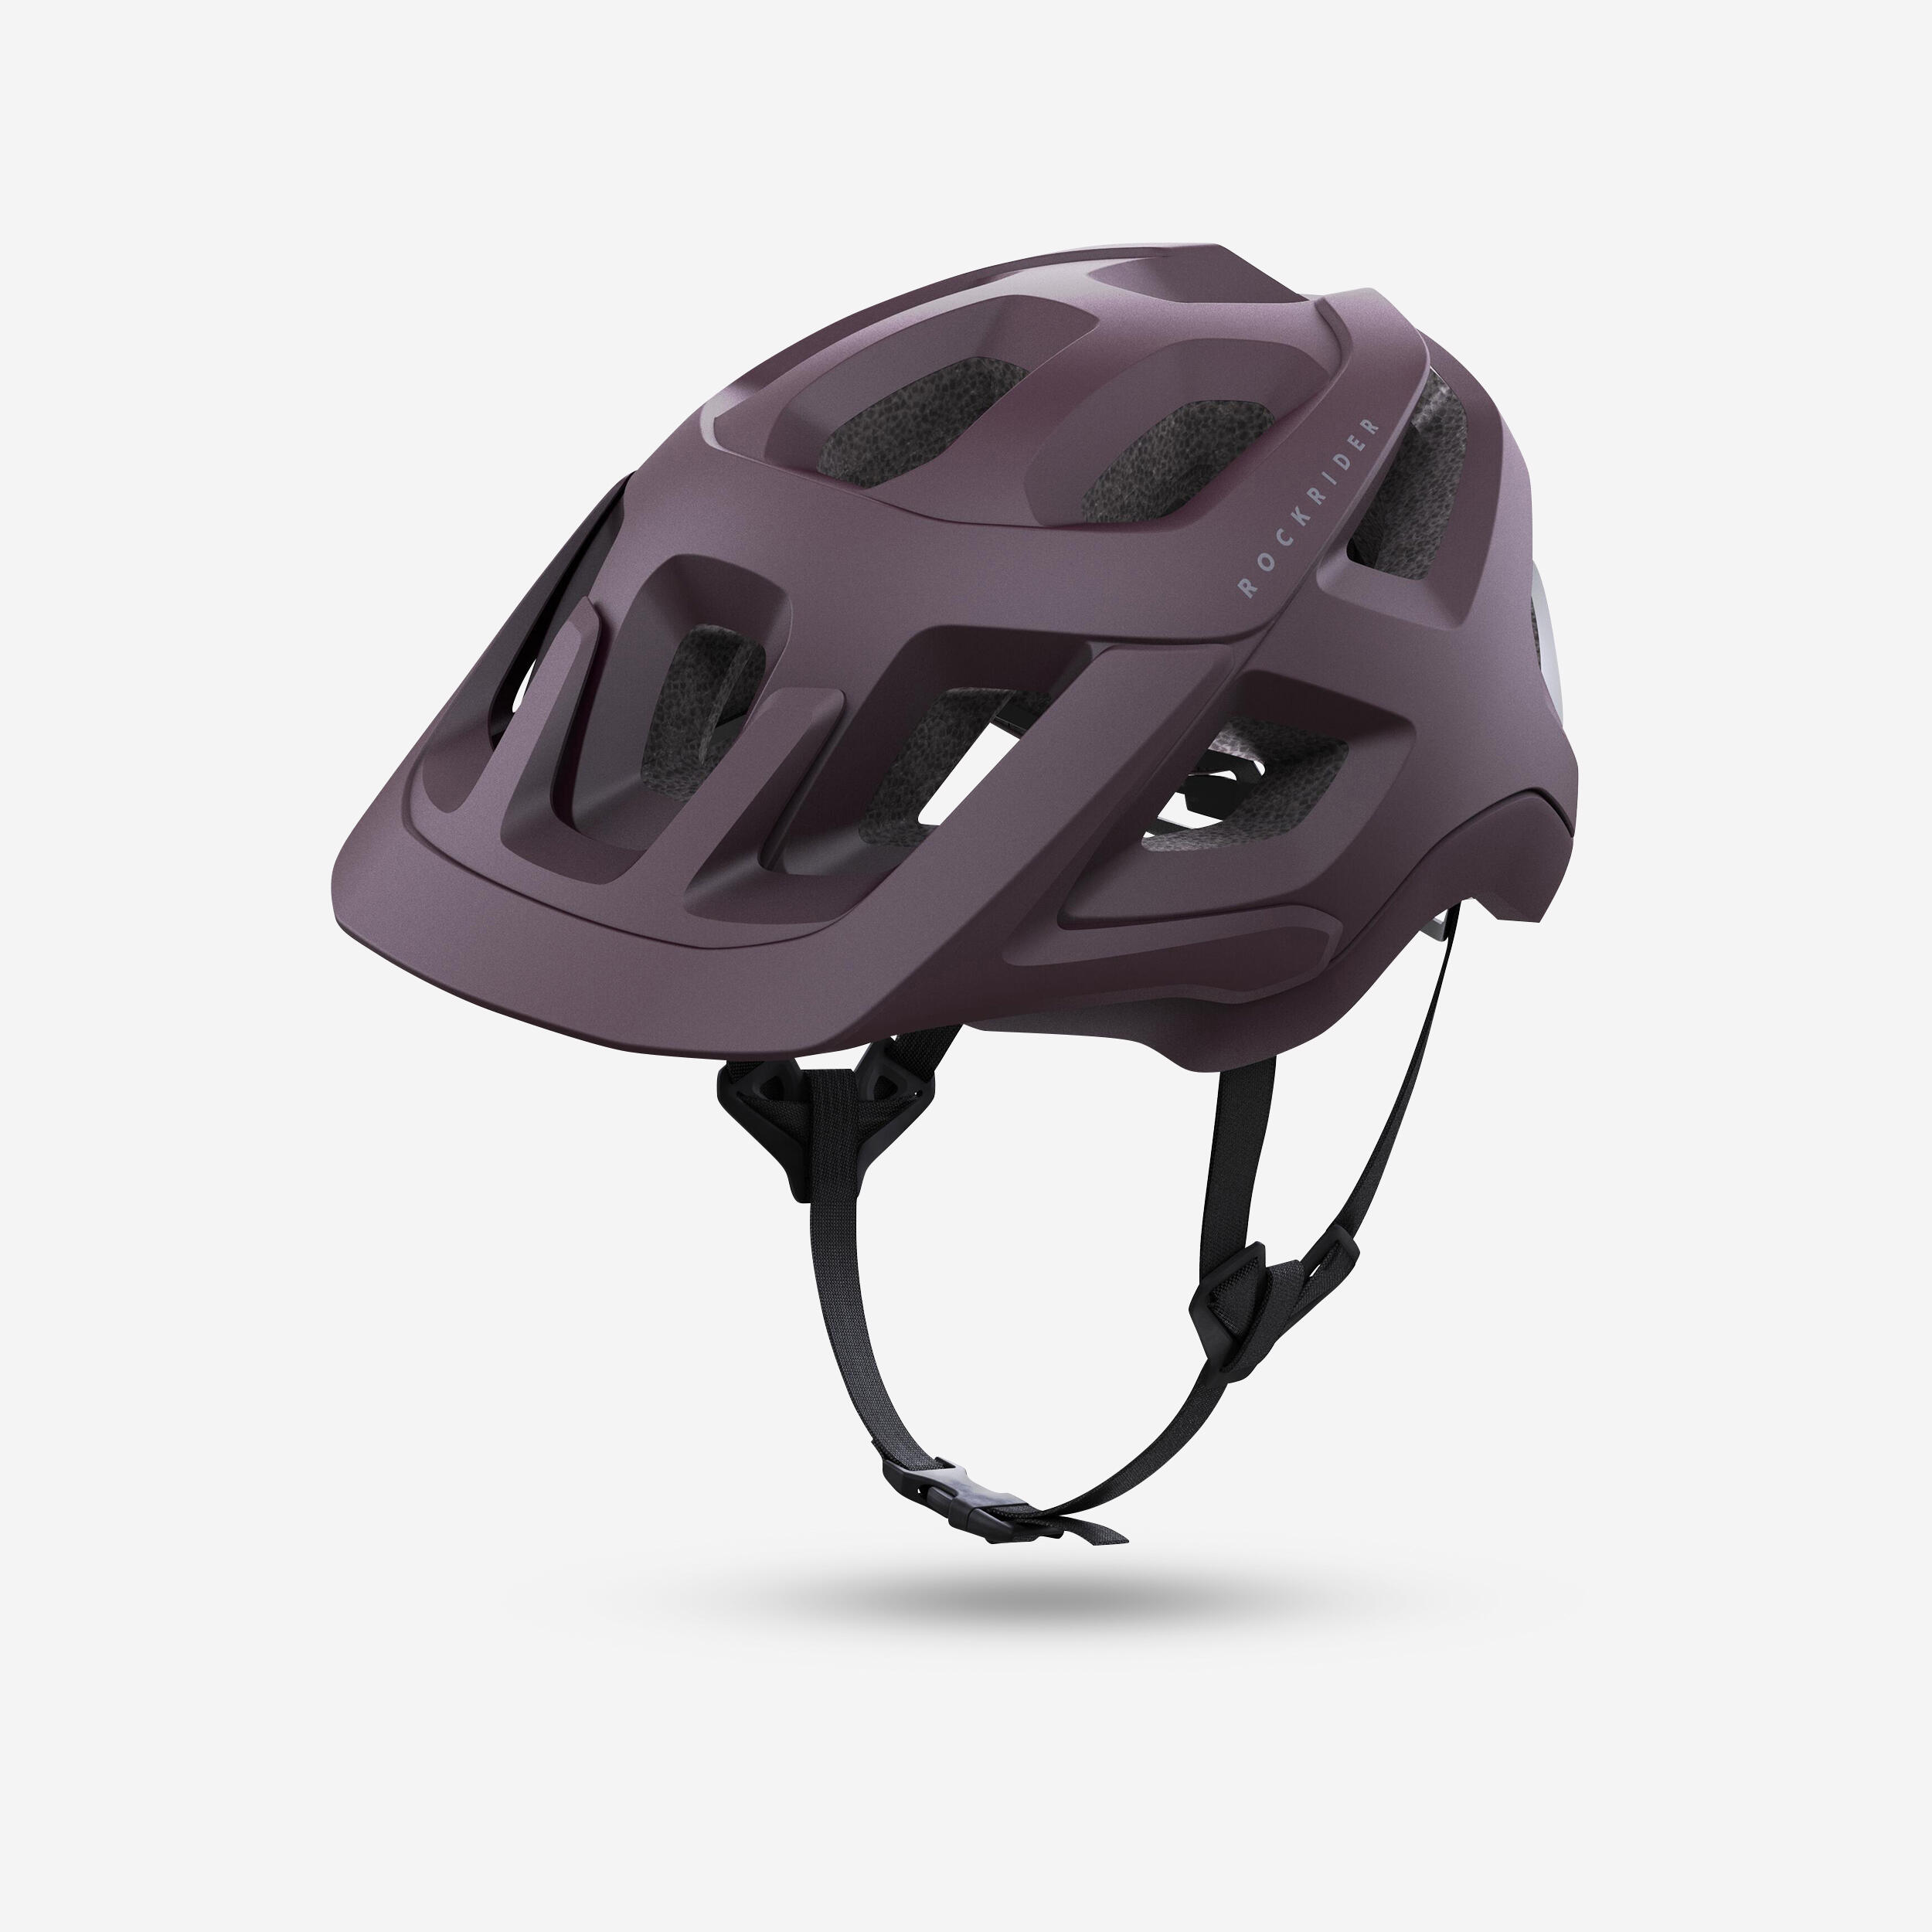 ROCKRIDER Mountain Bike Helmet EXPL 500 - Burgundy